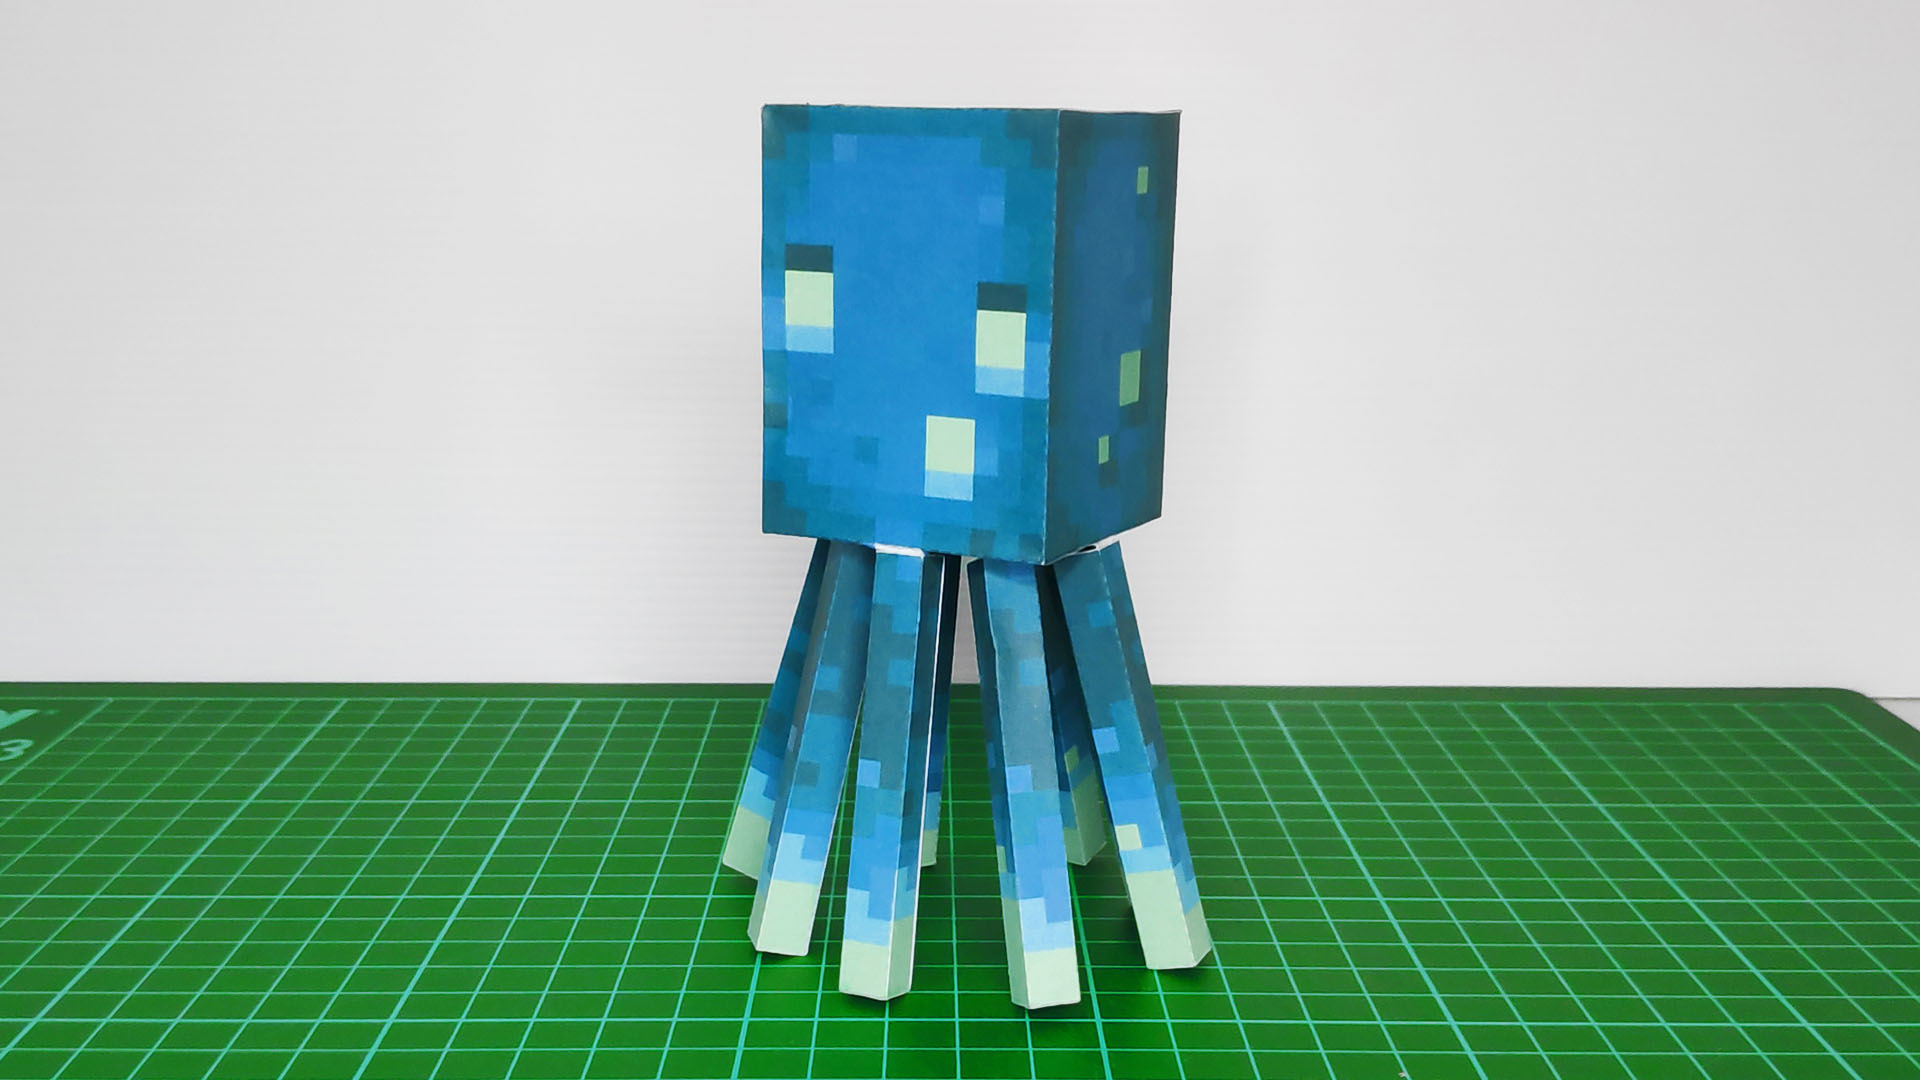 AlsaHonggo on X: Strider Minecraft Papercraft #MinecraftPapercraft   / X